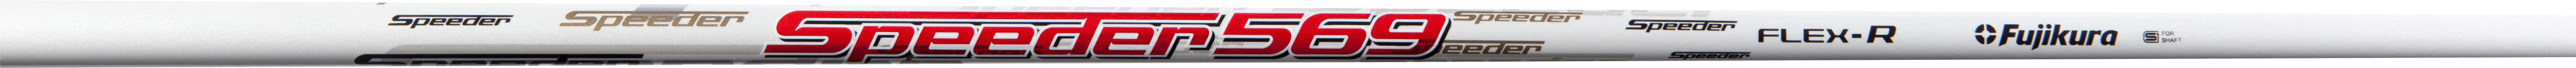 Motore Speeder 569 | Fujikura Golf LIVE